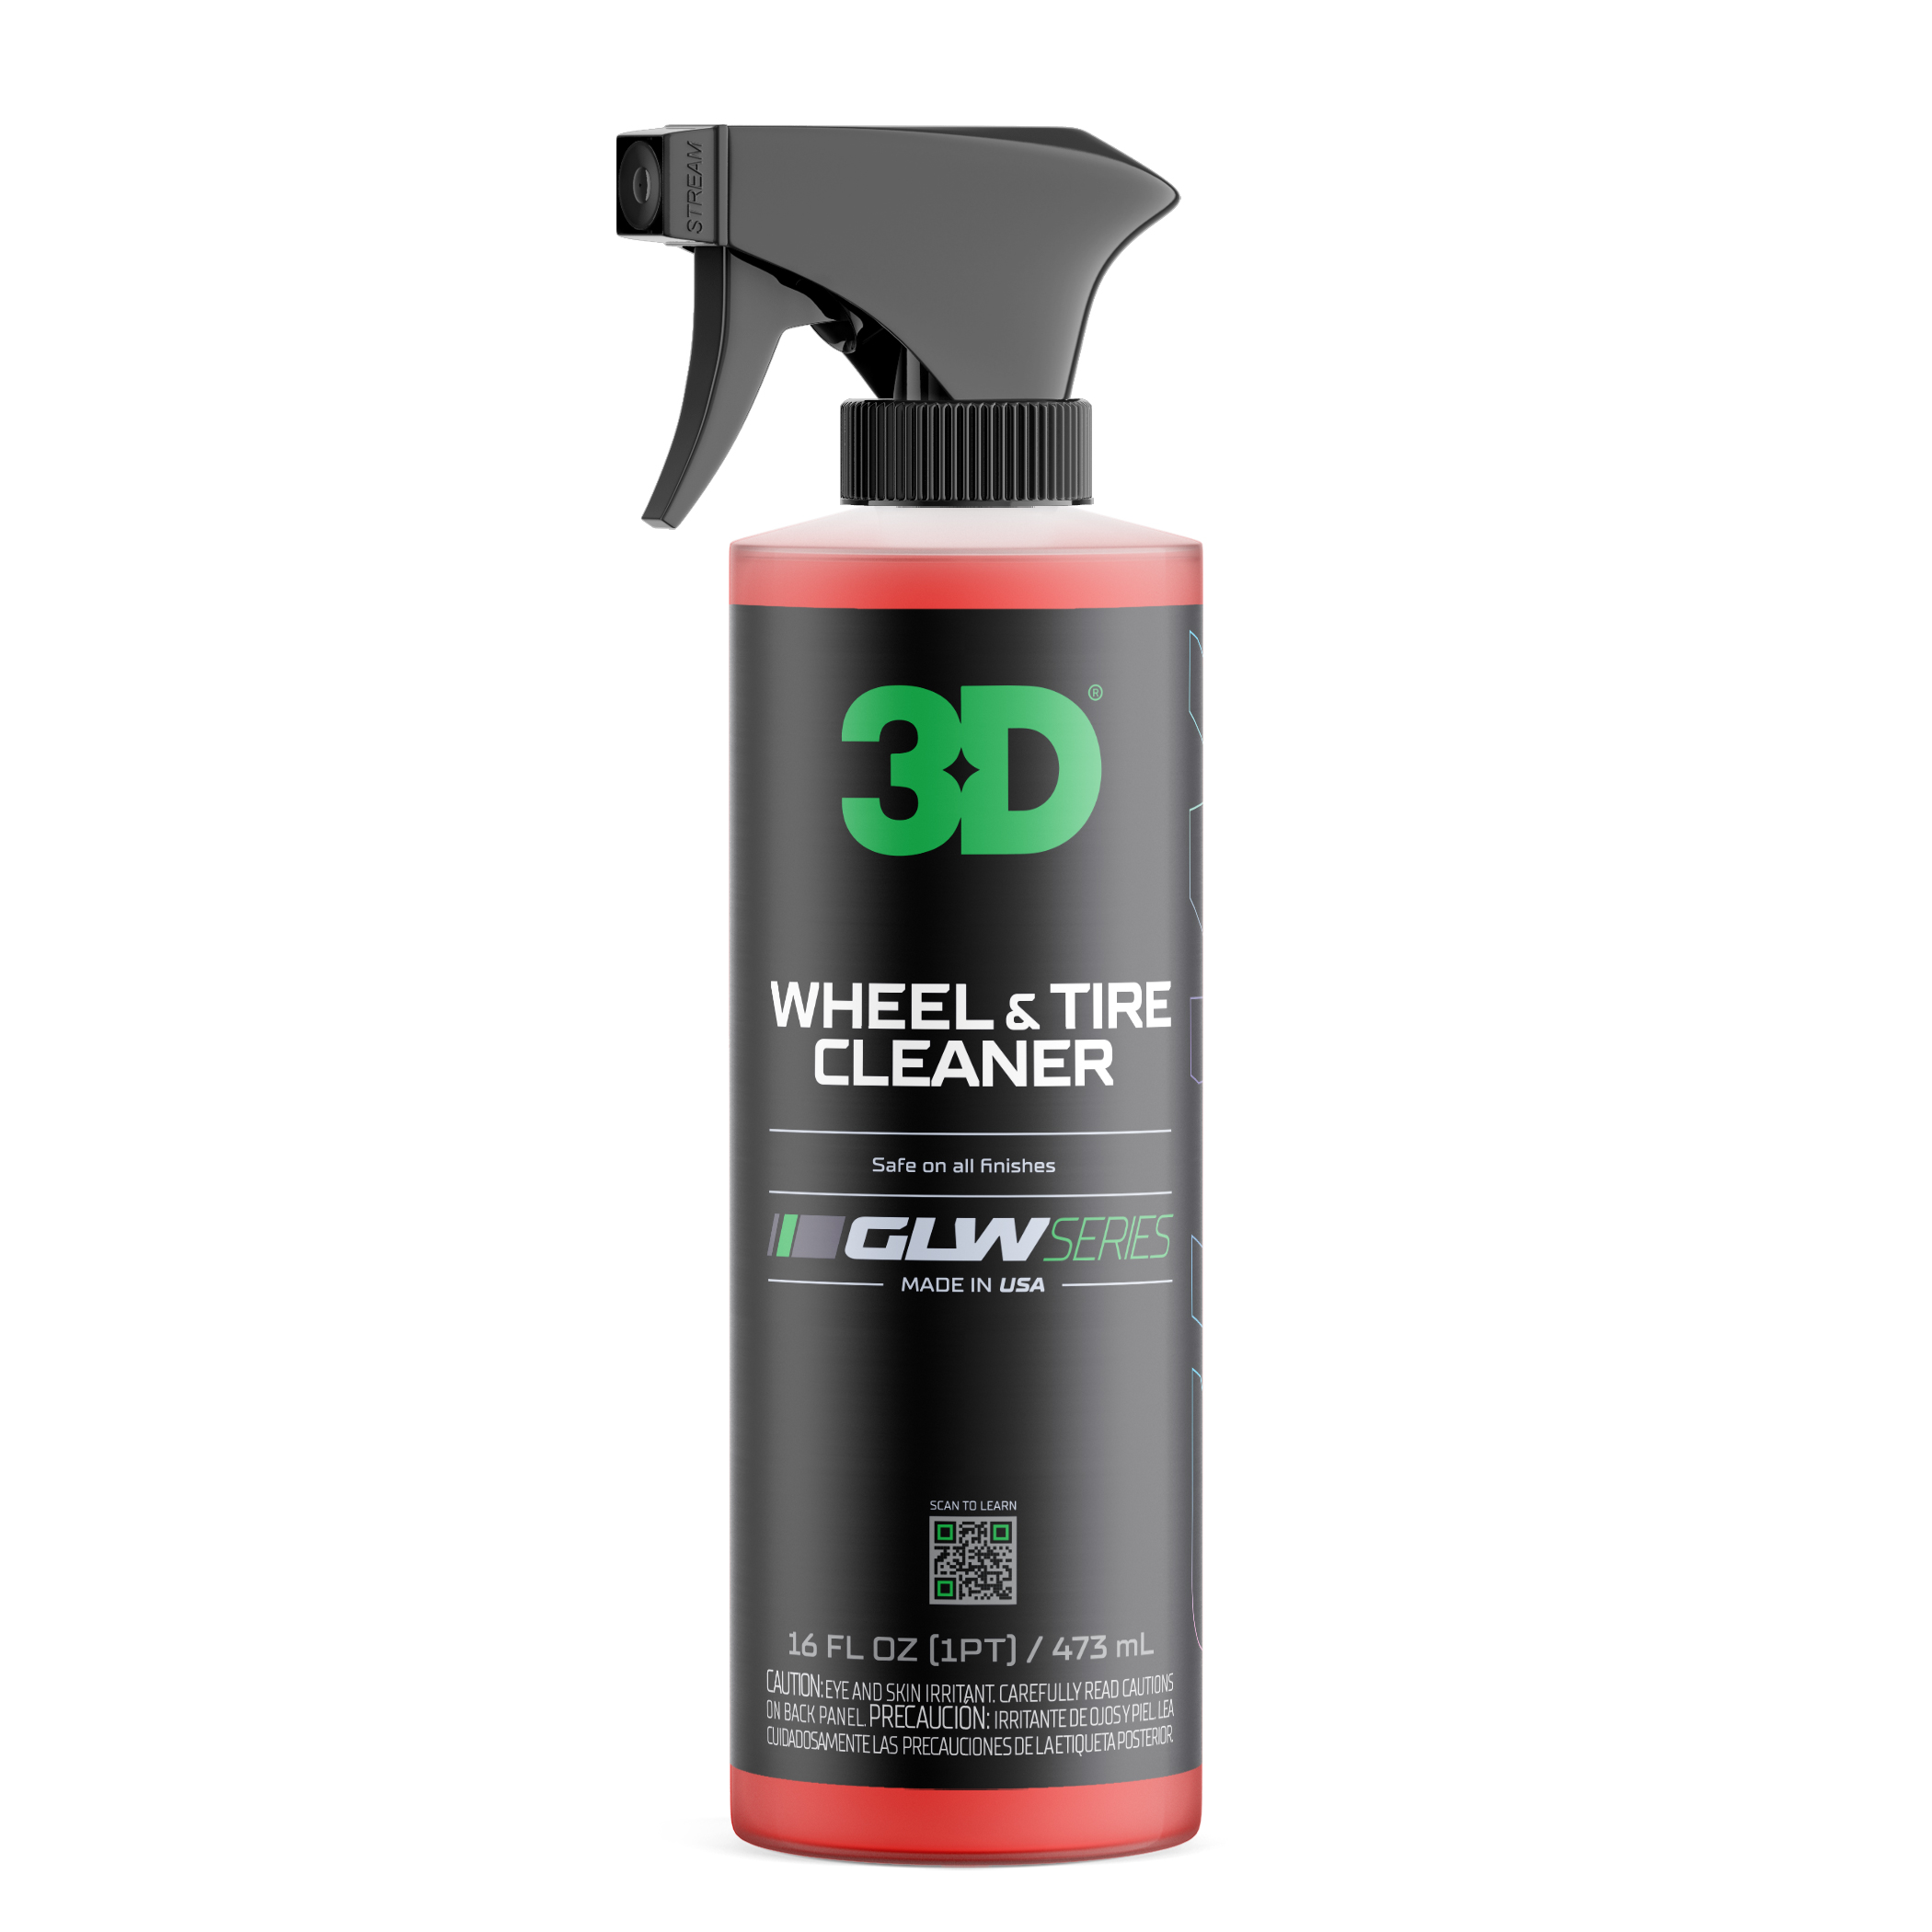 3D GLW Series Wheel & Tire Cleaner